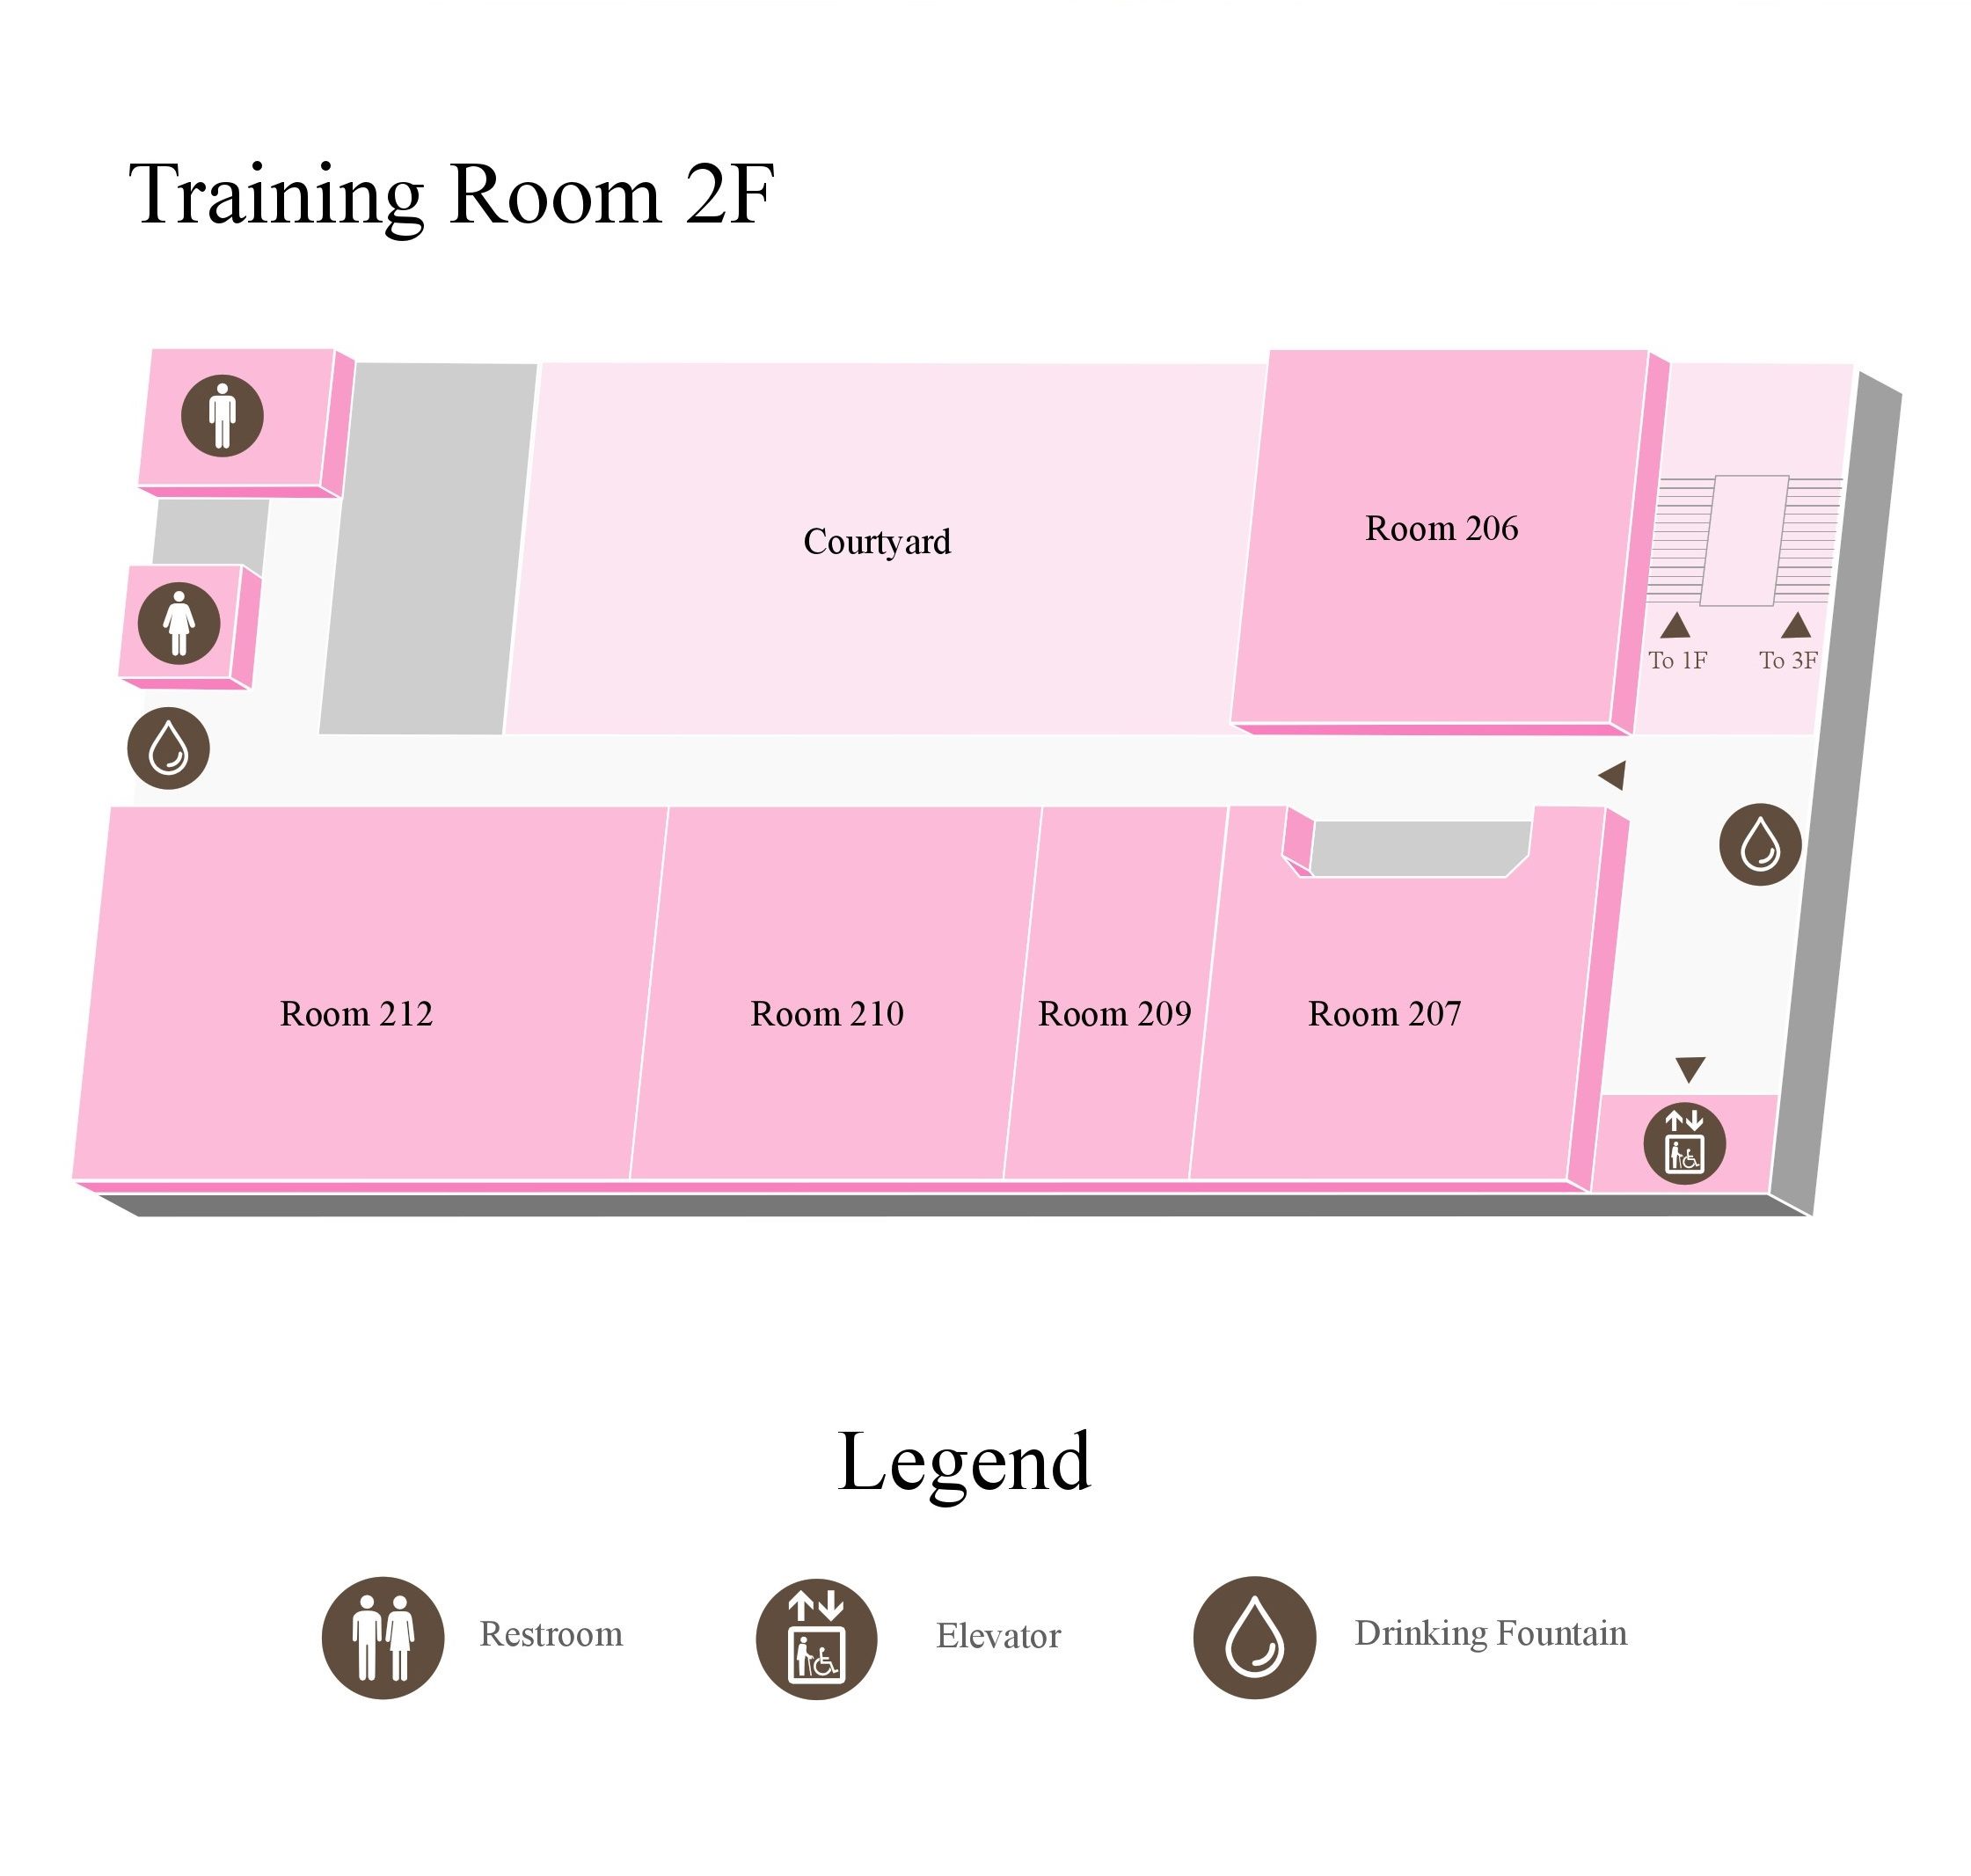 Training Room 2F